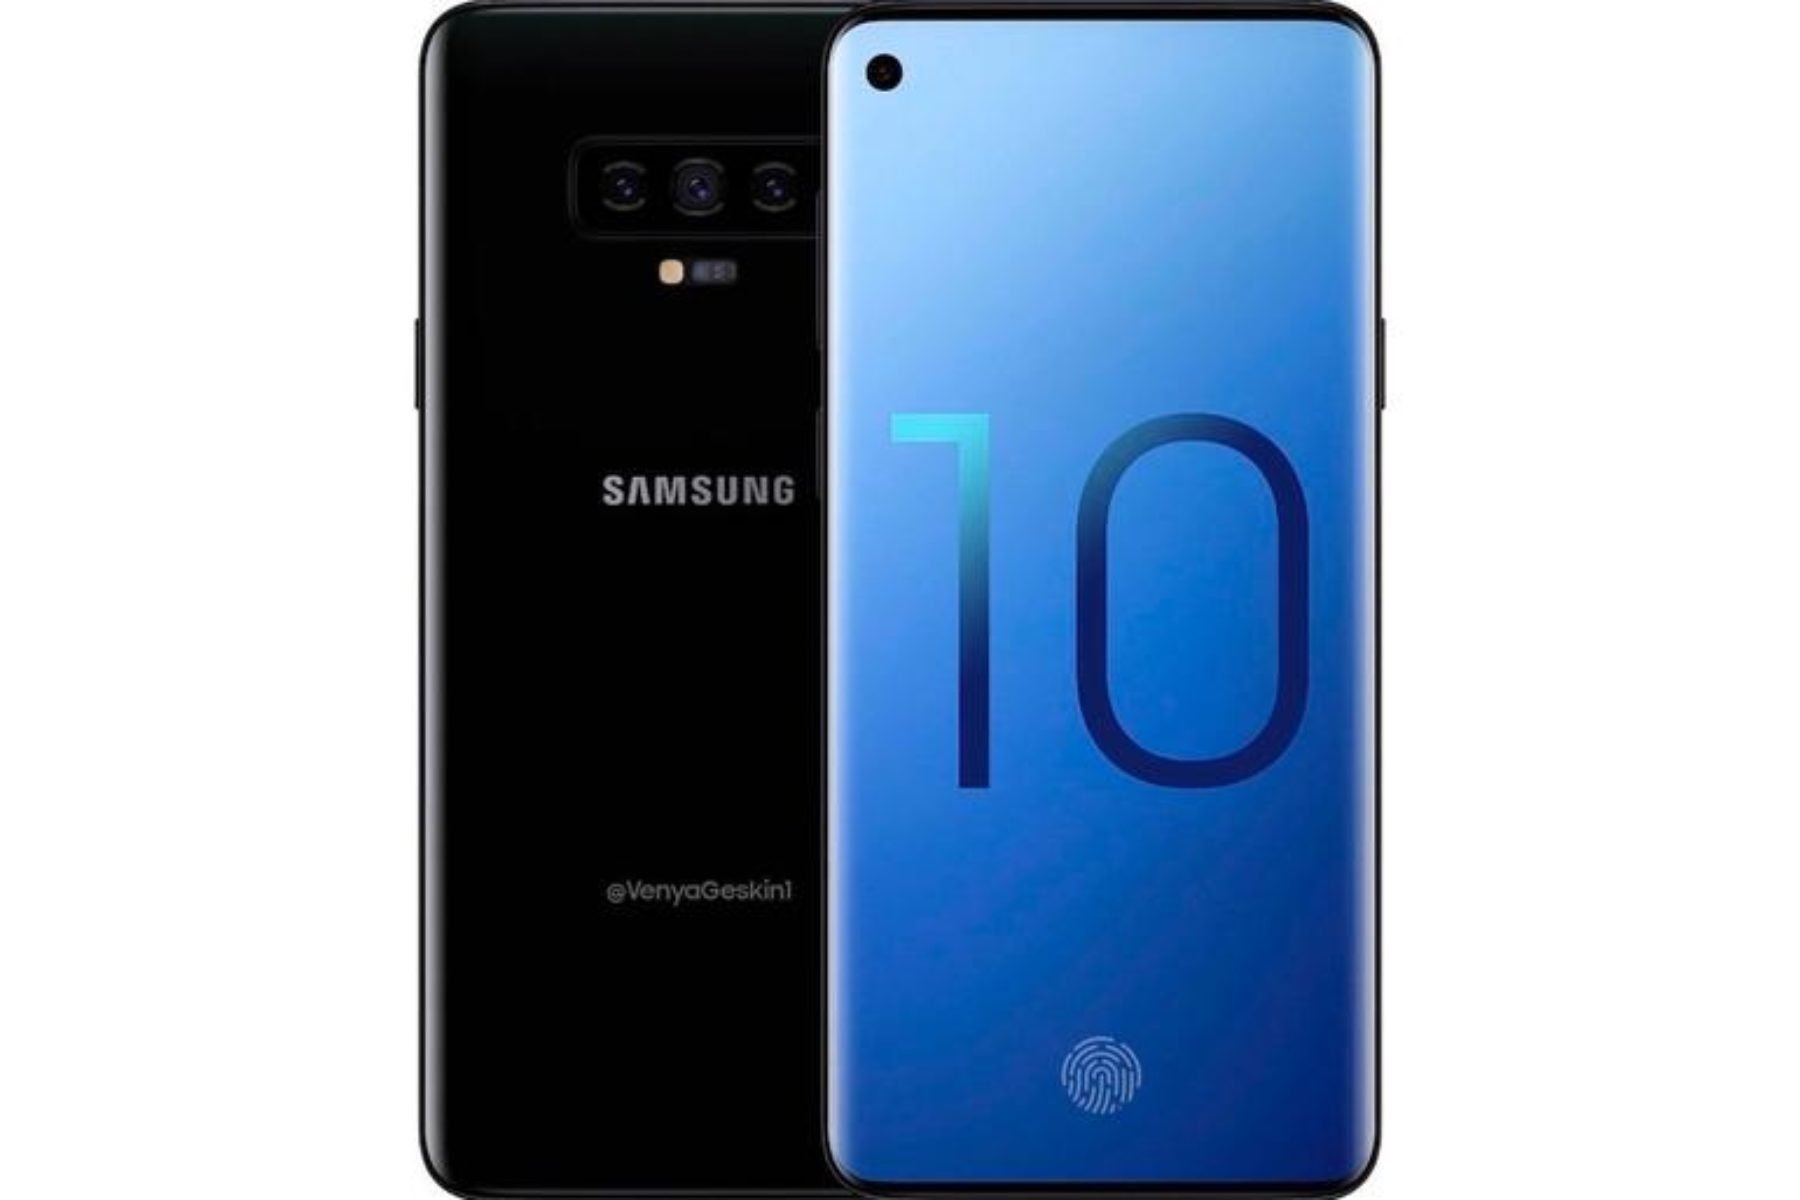 Самсунг новая 10. Samsung Galaxy s10. Samsung Galaxy s10 Plus. Samsung Galaxy s10 / s10 +. S10 Plus.